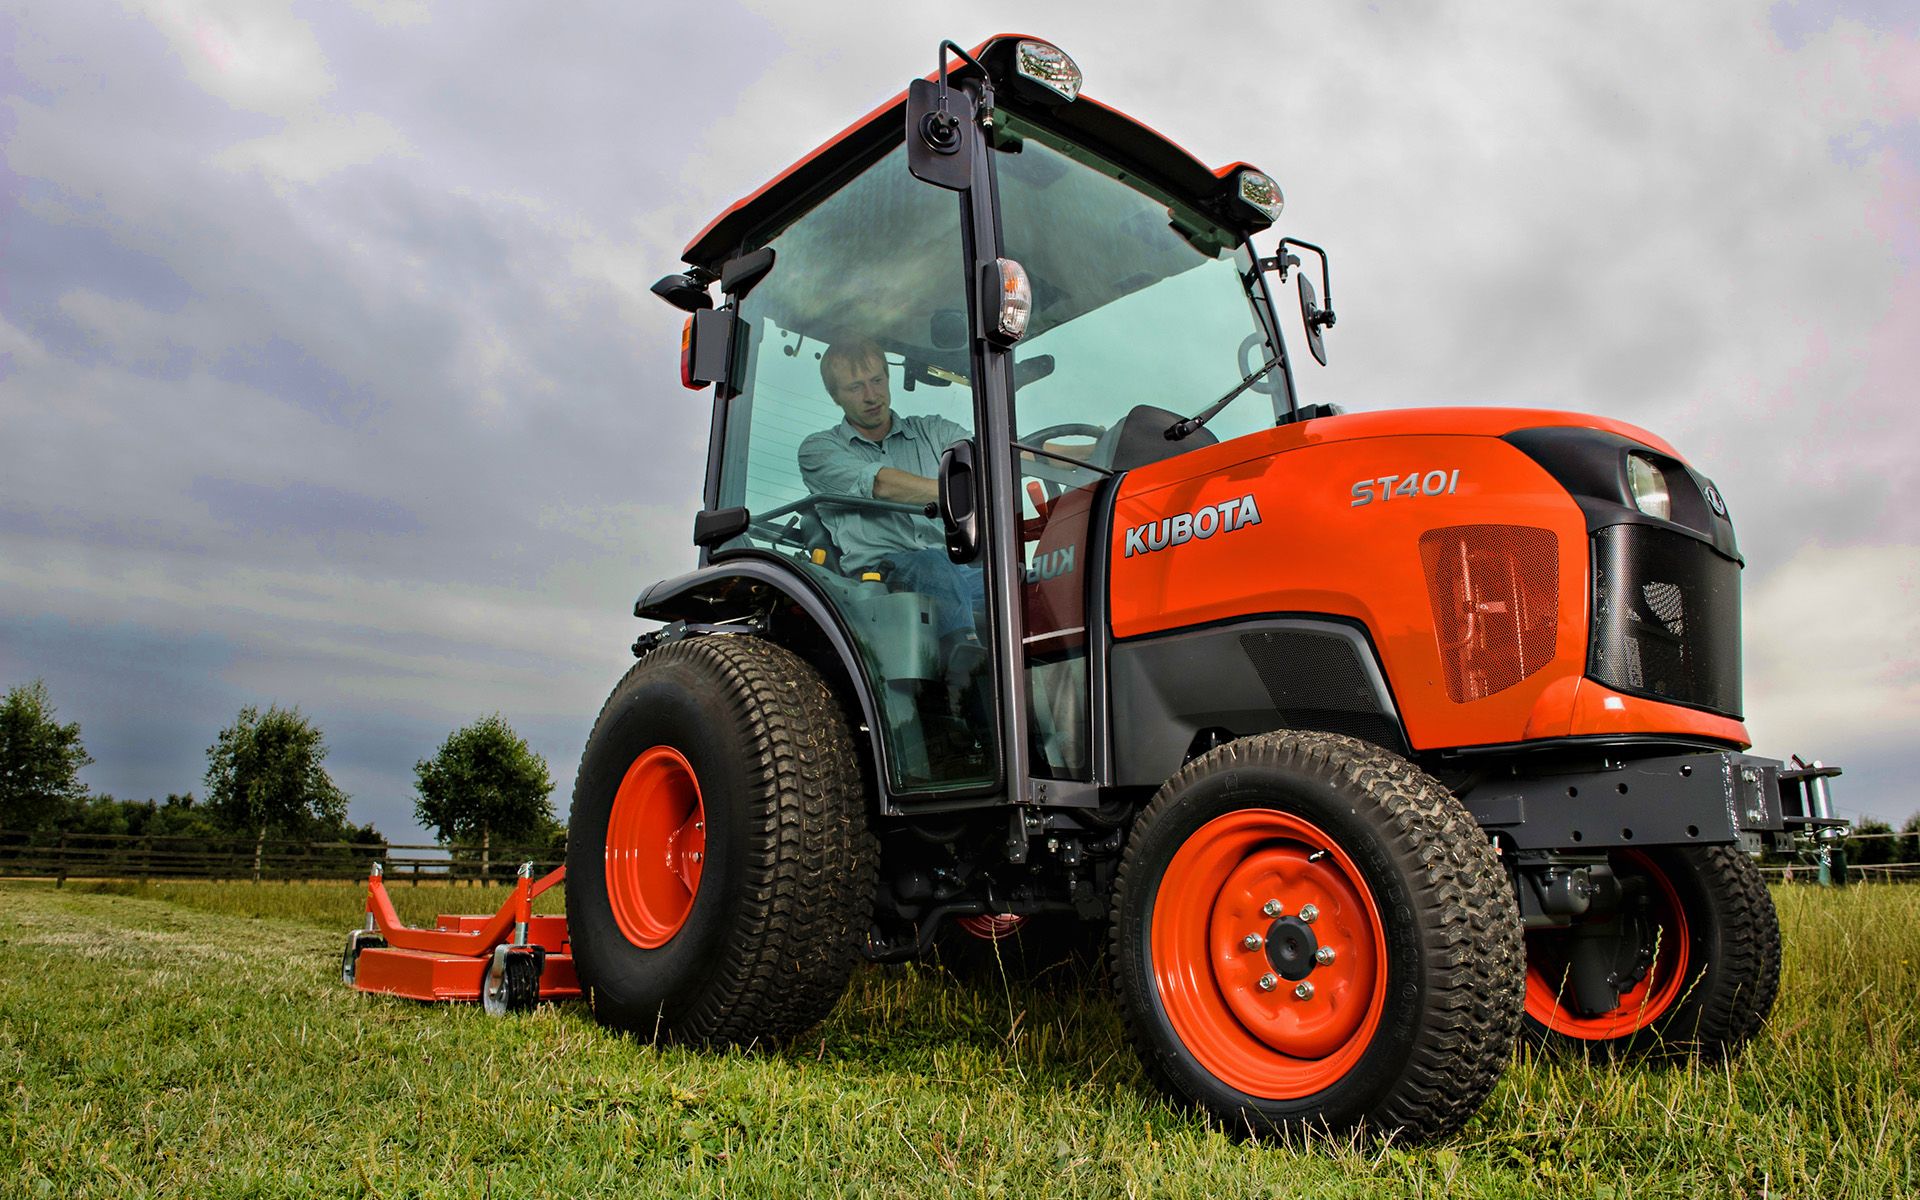 Download wallpapers Kubota ST401, picking grass, 2020 tractors.